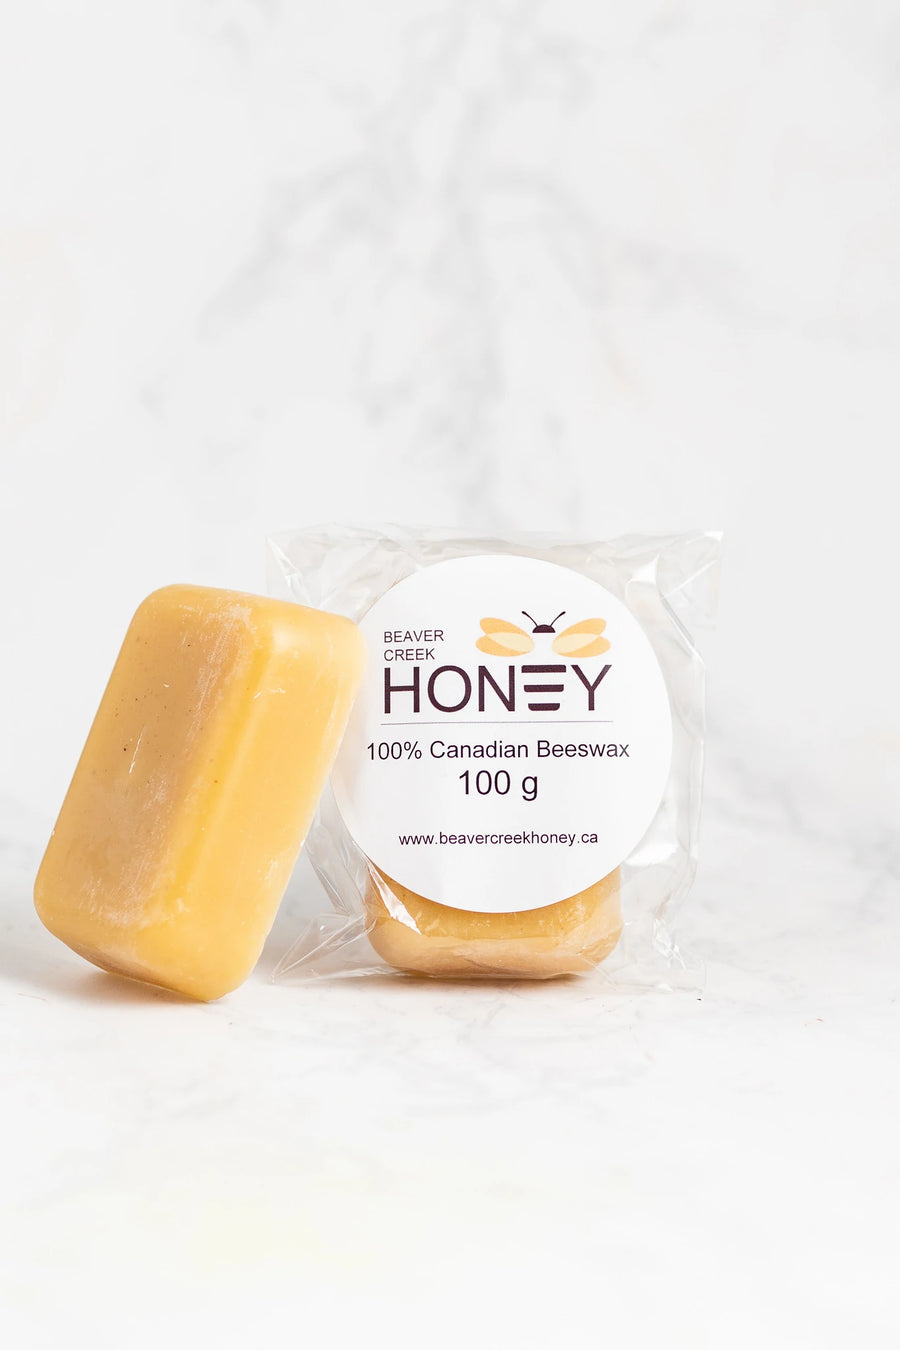 100% Pure Beeswax - Beaver Creek Honey